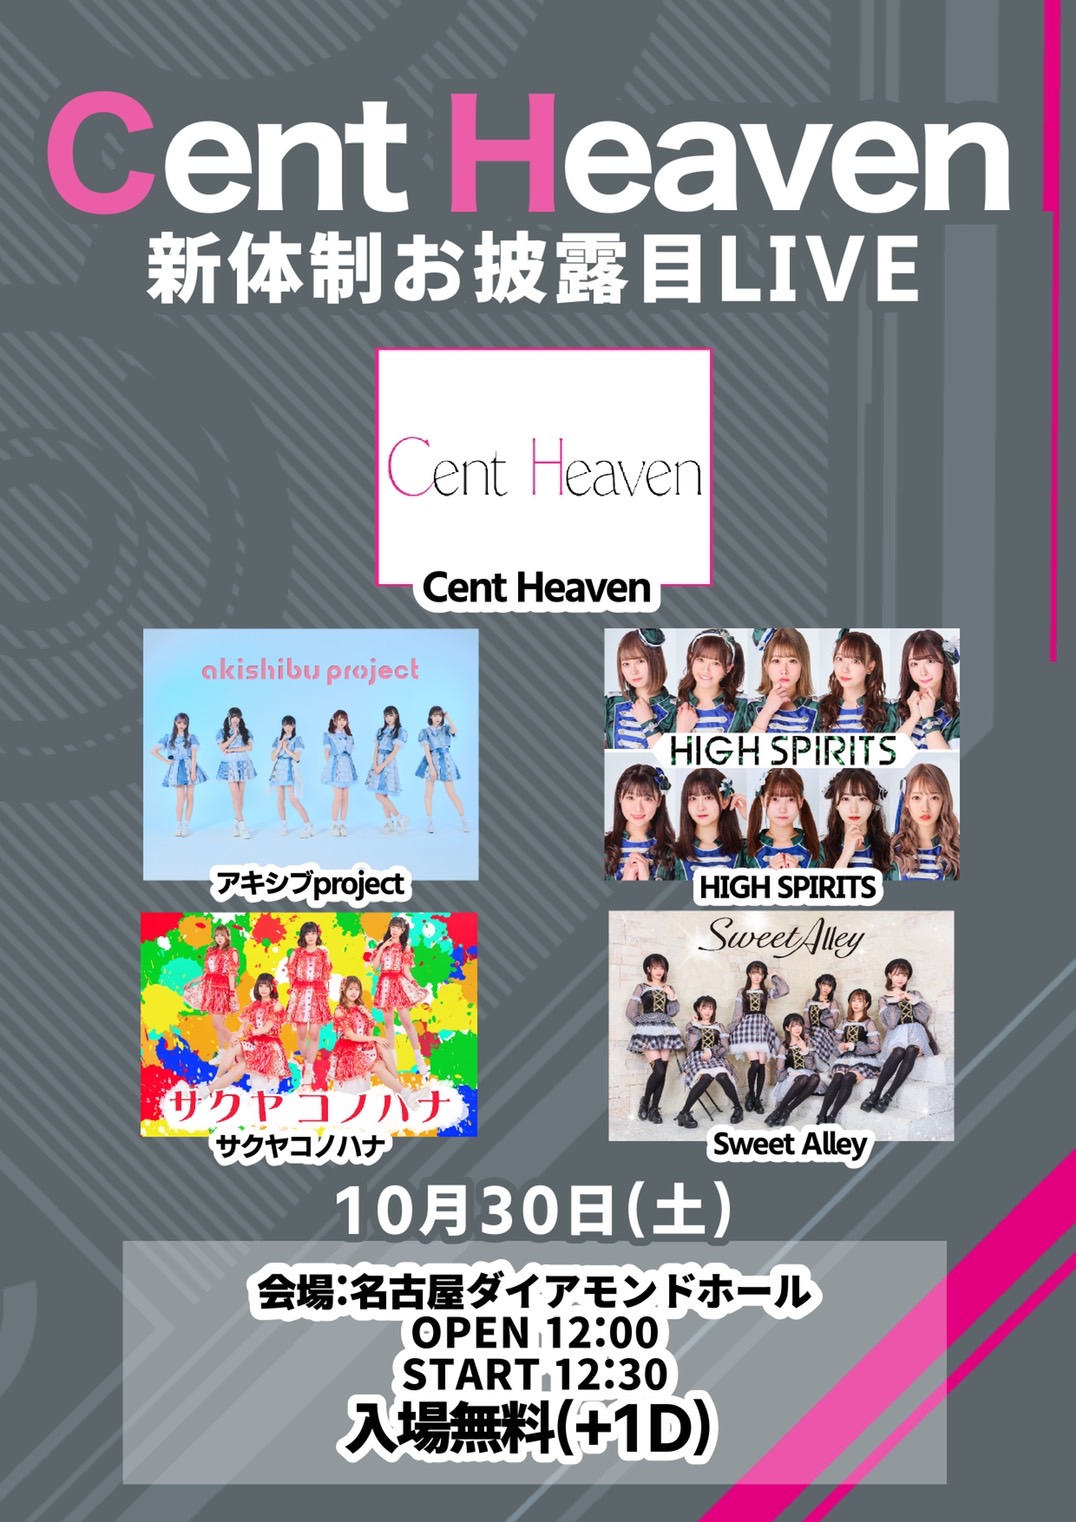 『Cent Heaven 新体制お披露目LIVE』